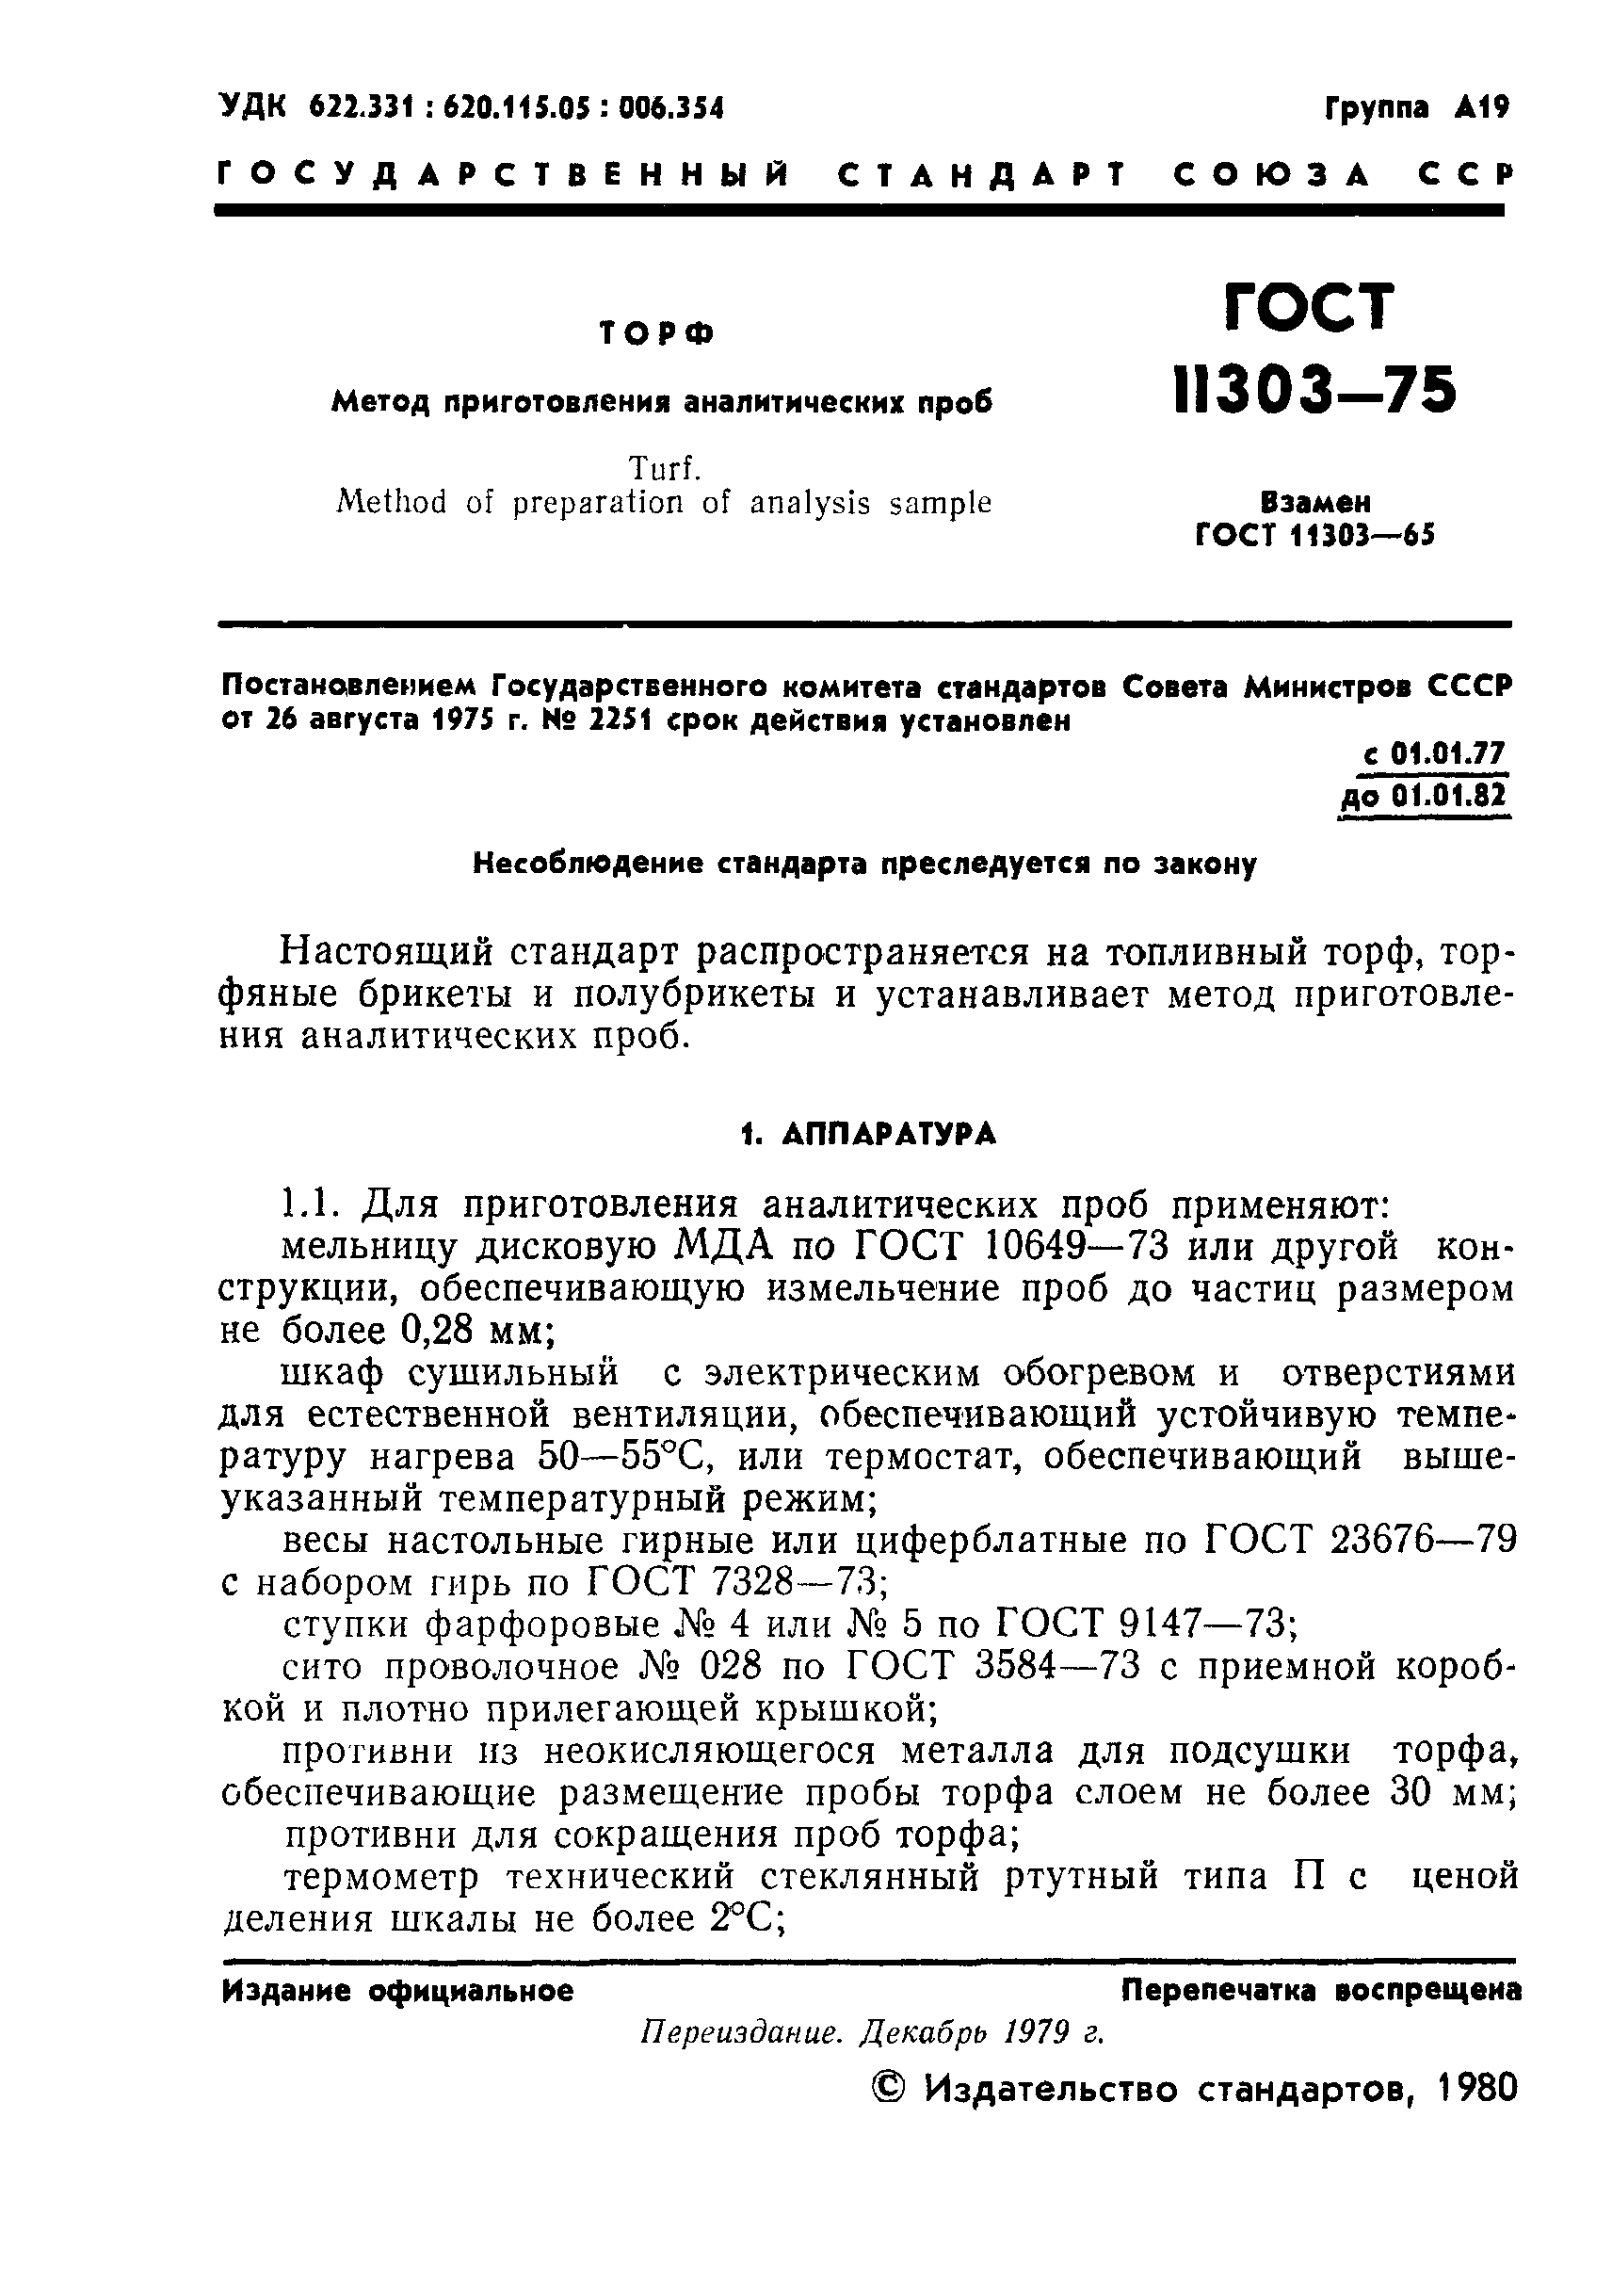 ГОСТ 11303-75